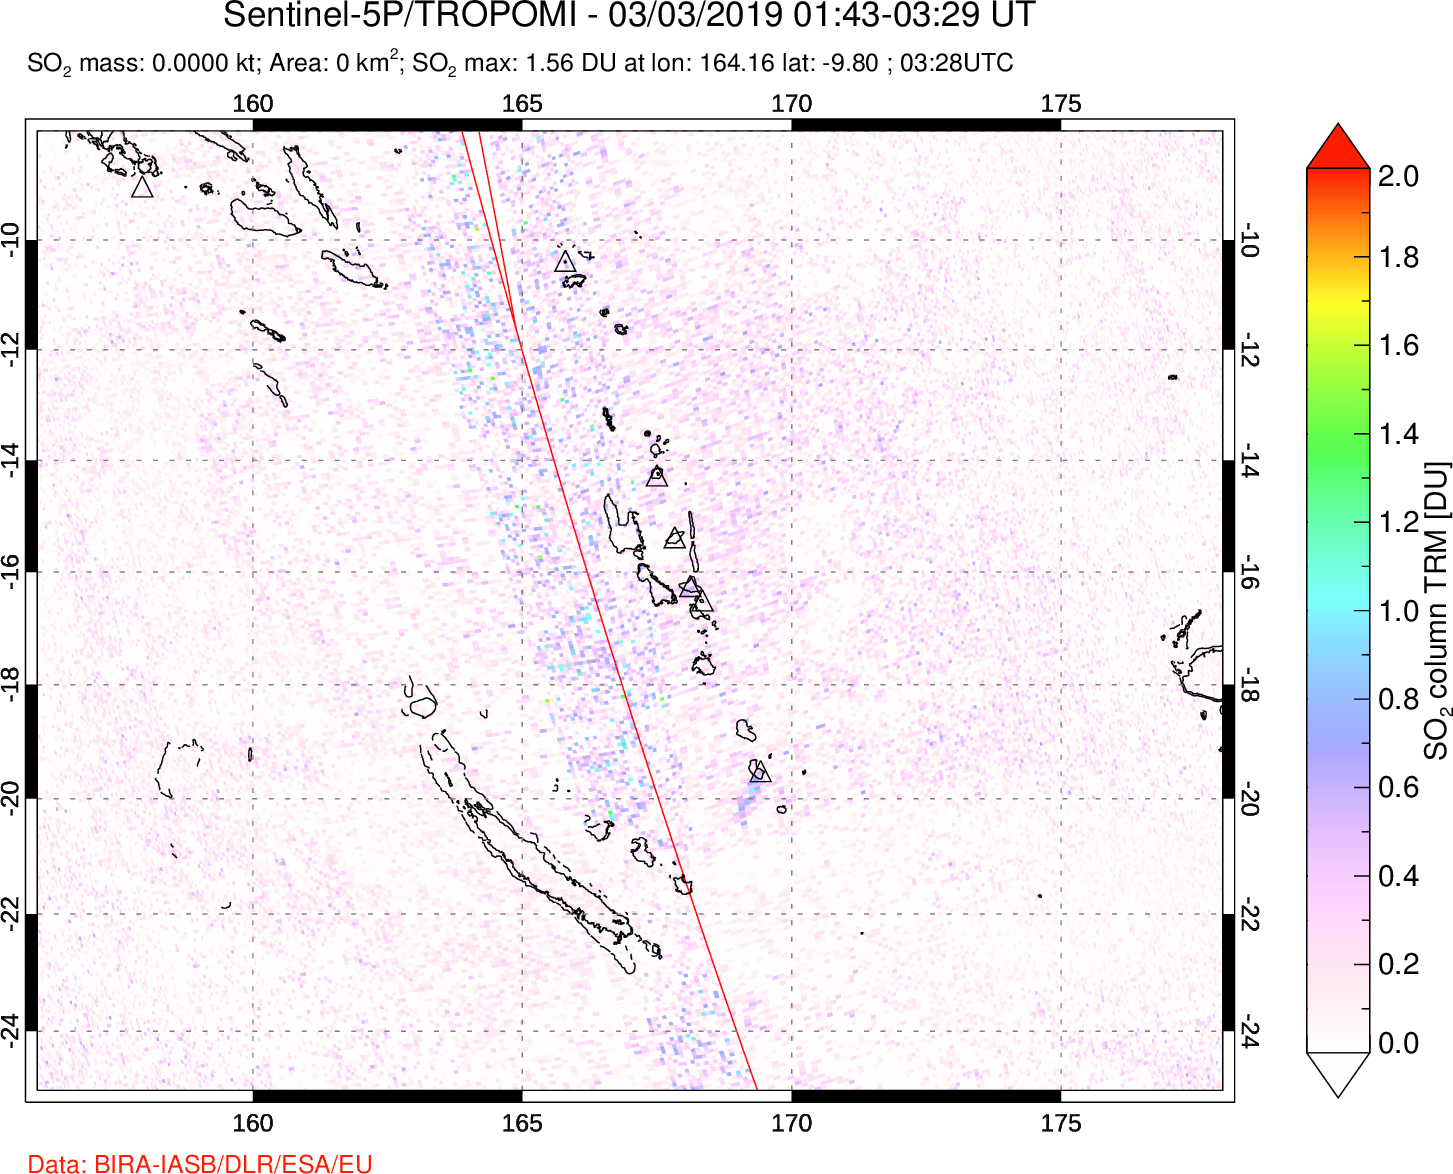 A sulfur dioxide image over Vanuatu, South Pacific on Mar 03, 2019.